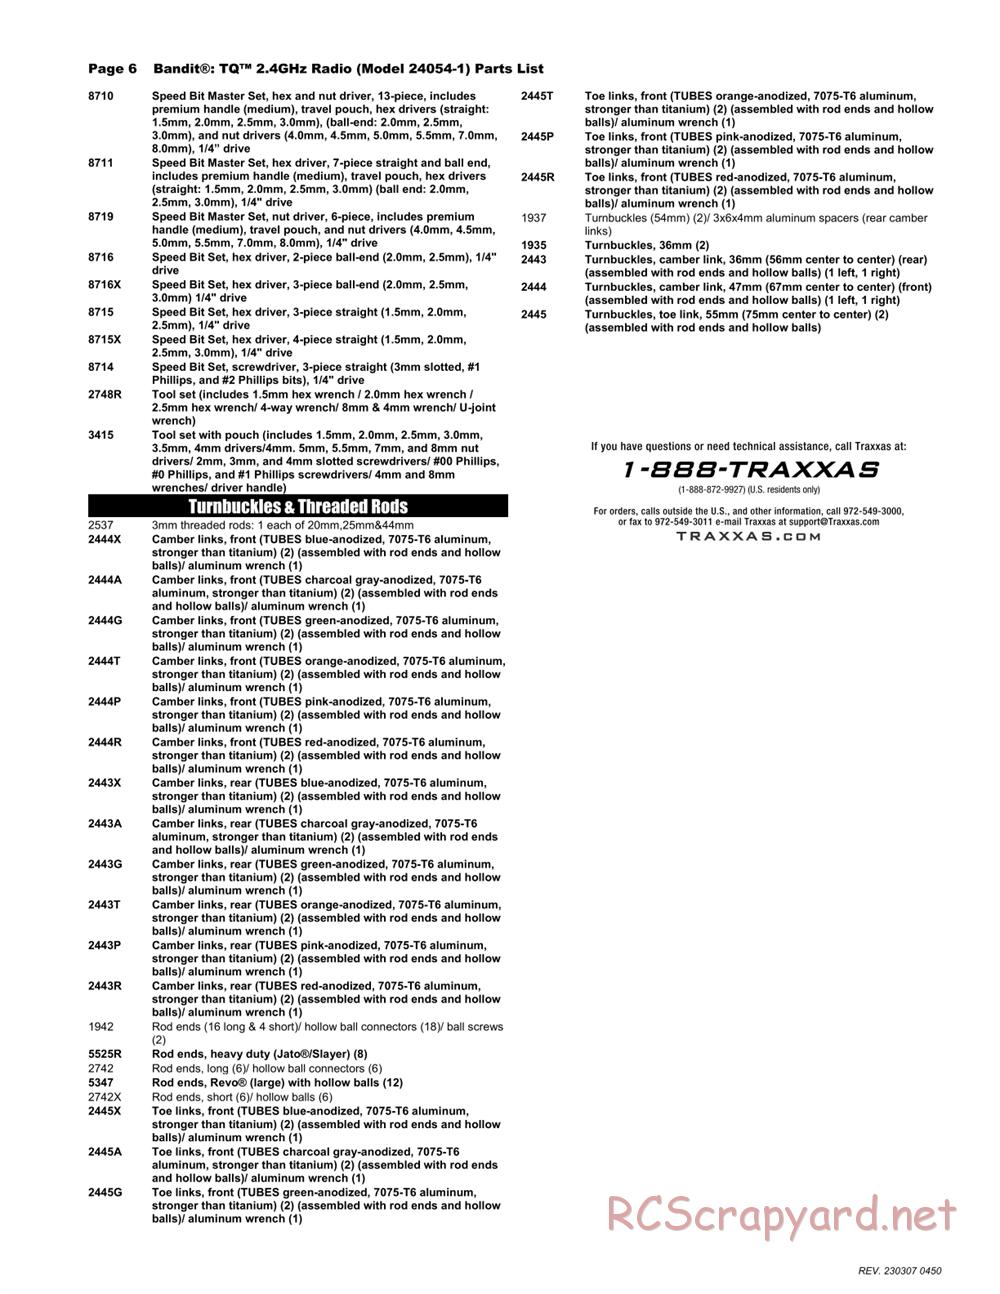 Traxxas - Bandit XL-5 (2015) - Parts List - Page 6